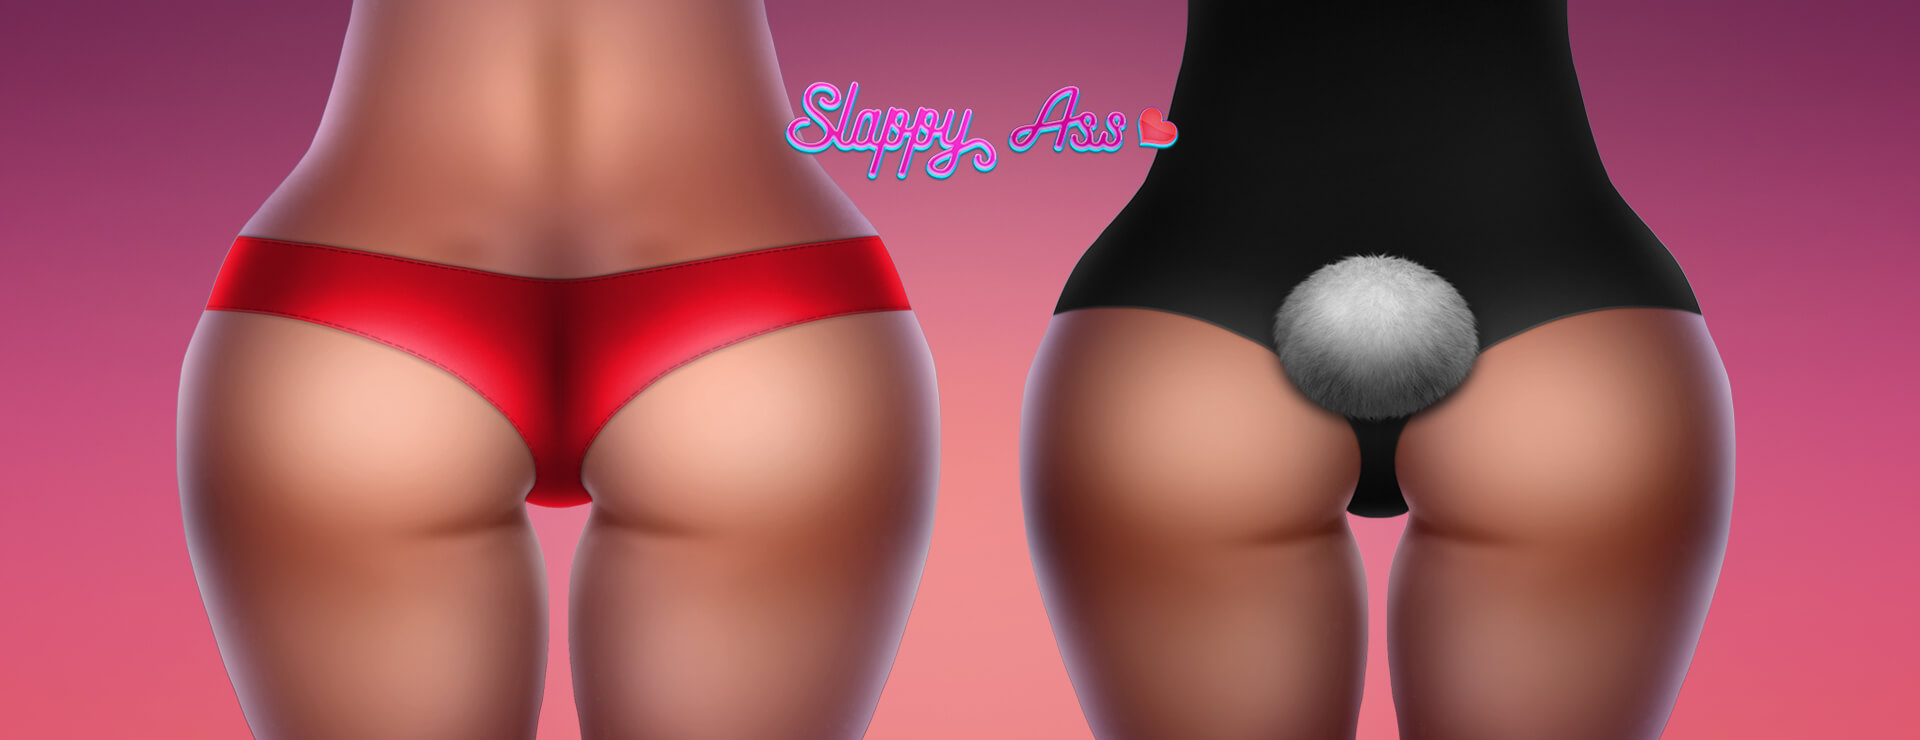 Slappy Ass - Simulación Juego